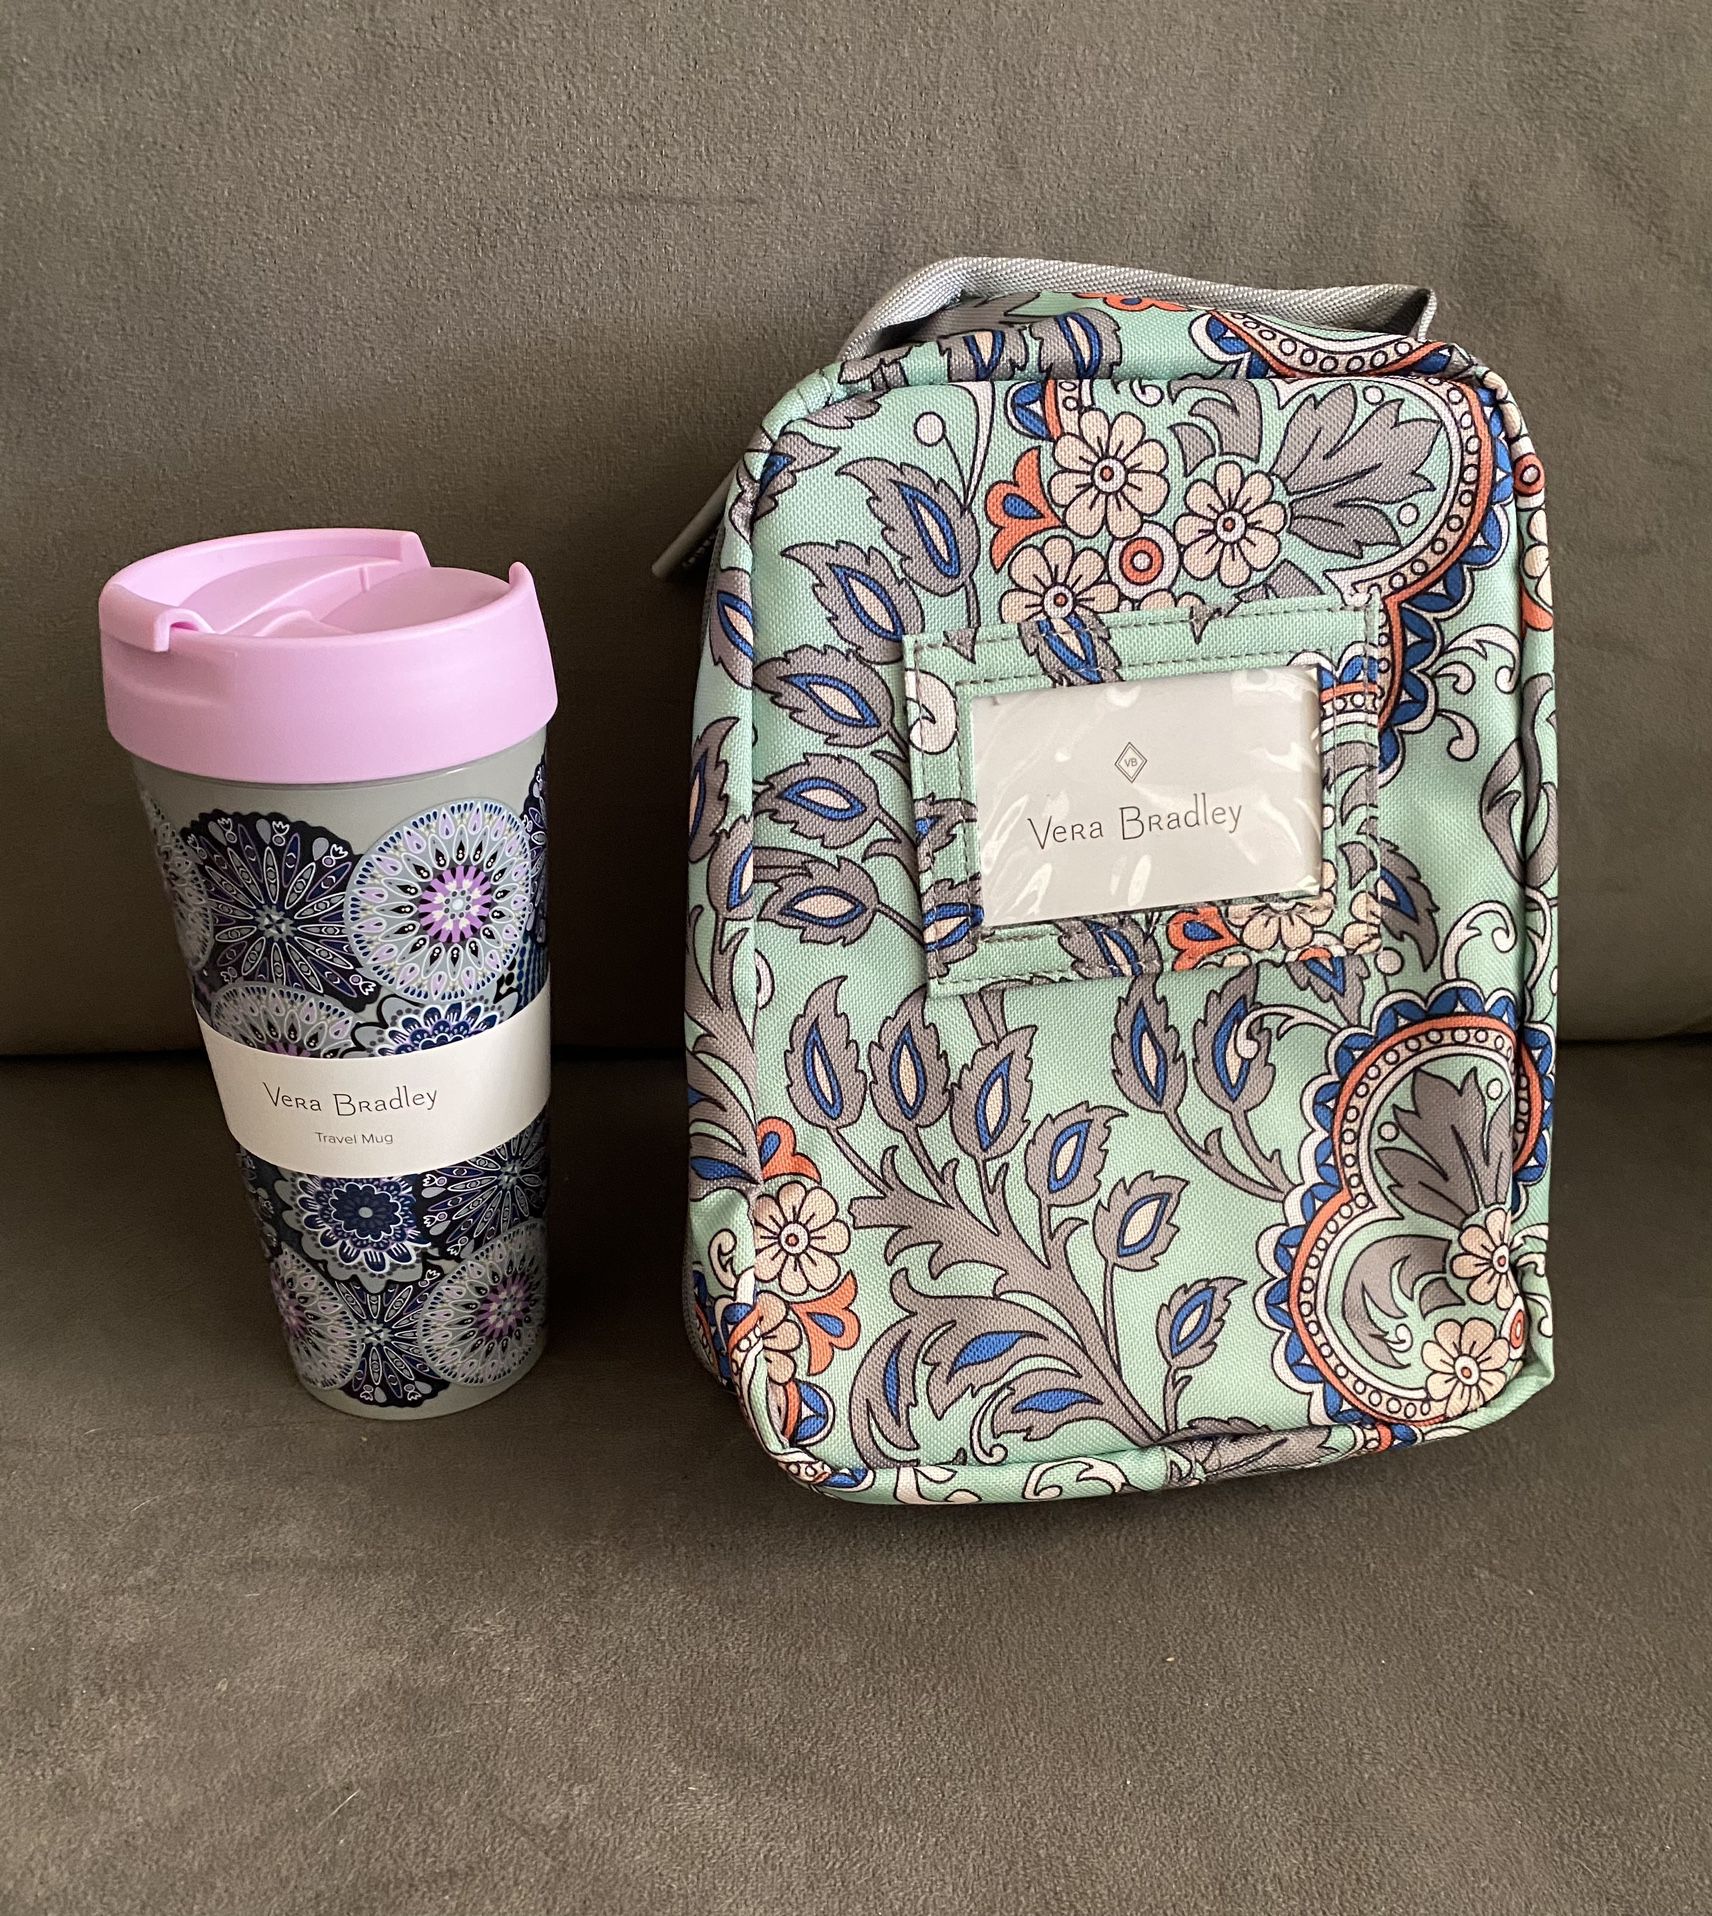 Vera Bradley Lunch Bag & Travel Mug